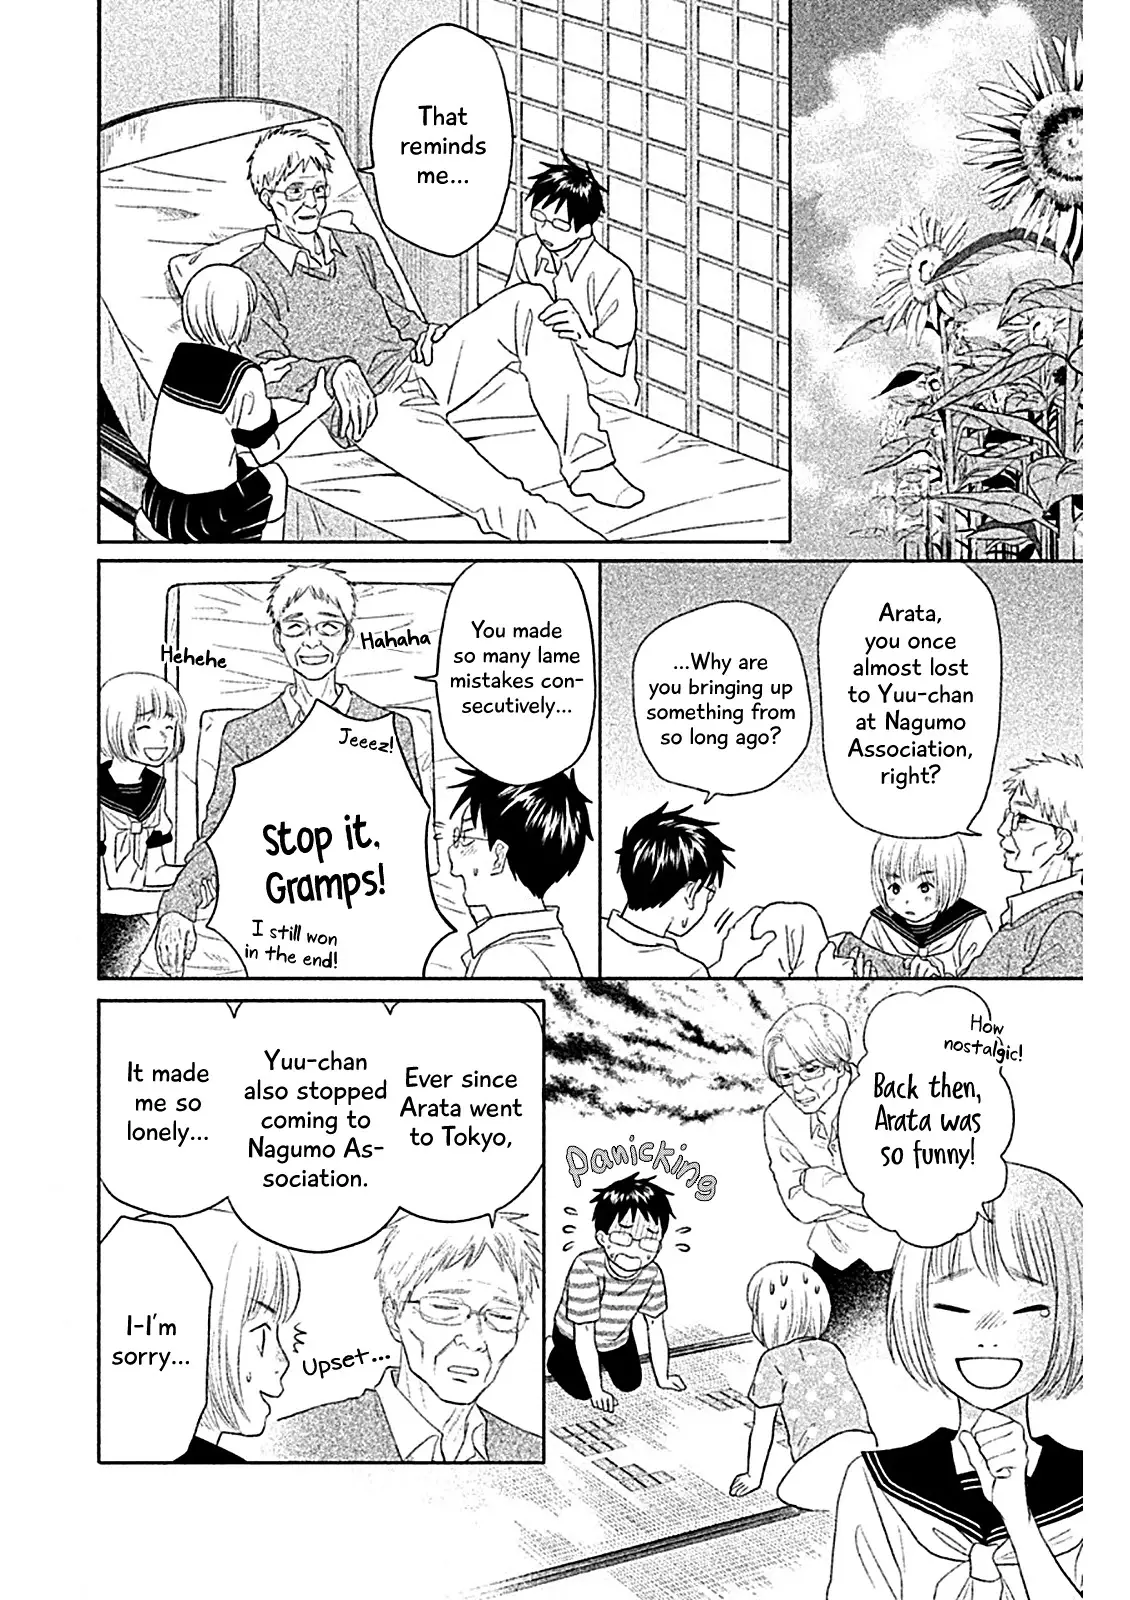 Chihayafuru: Middle School Arc - 8 page 14